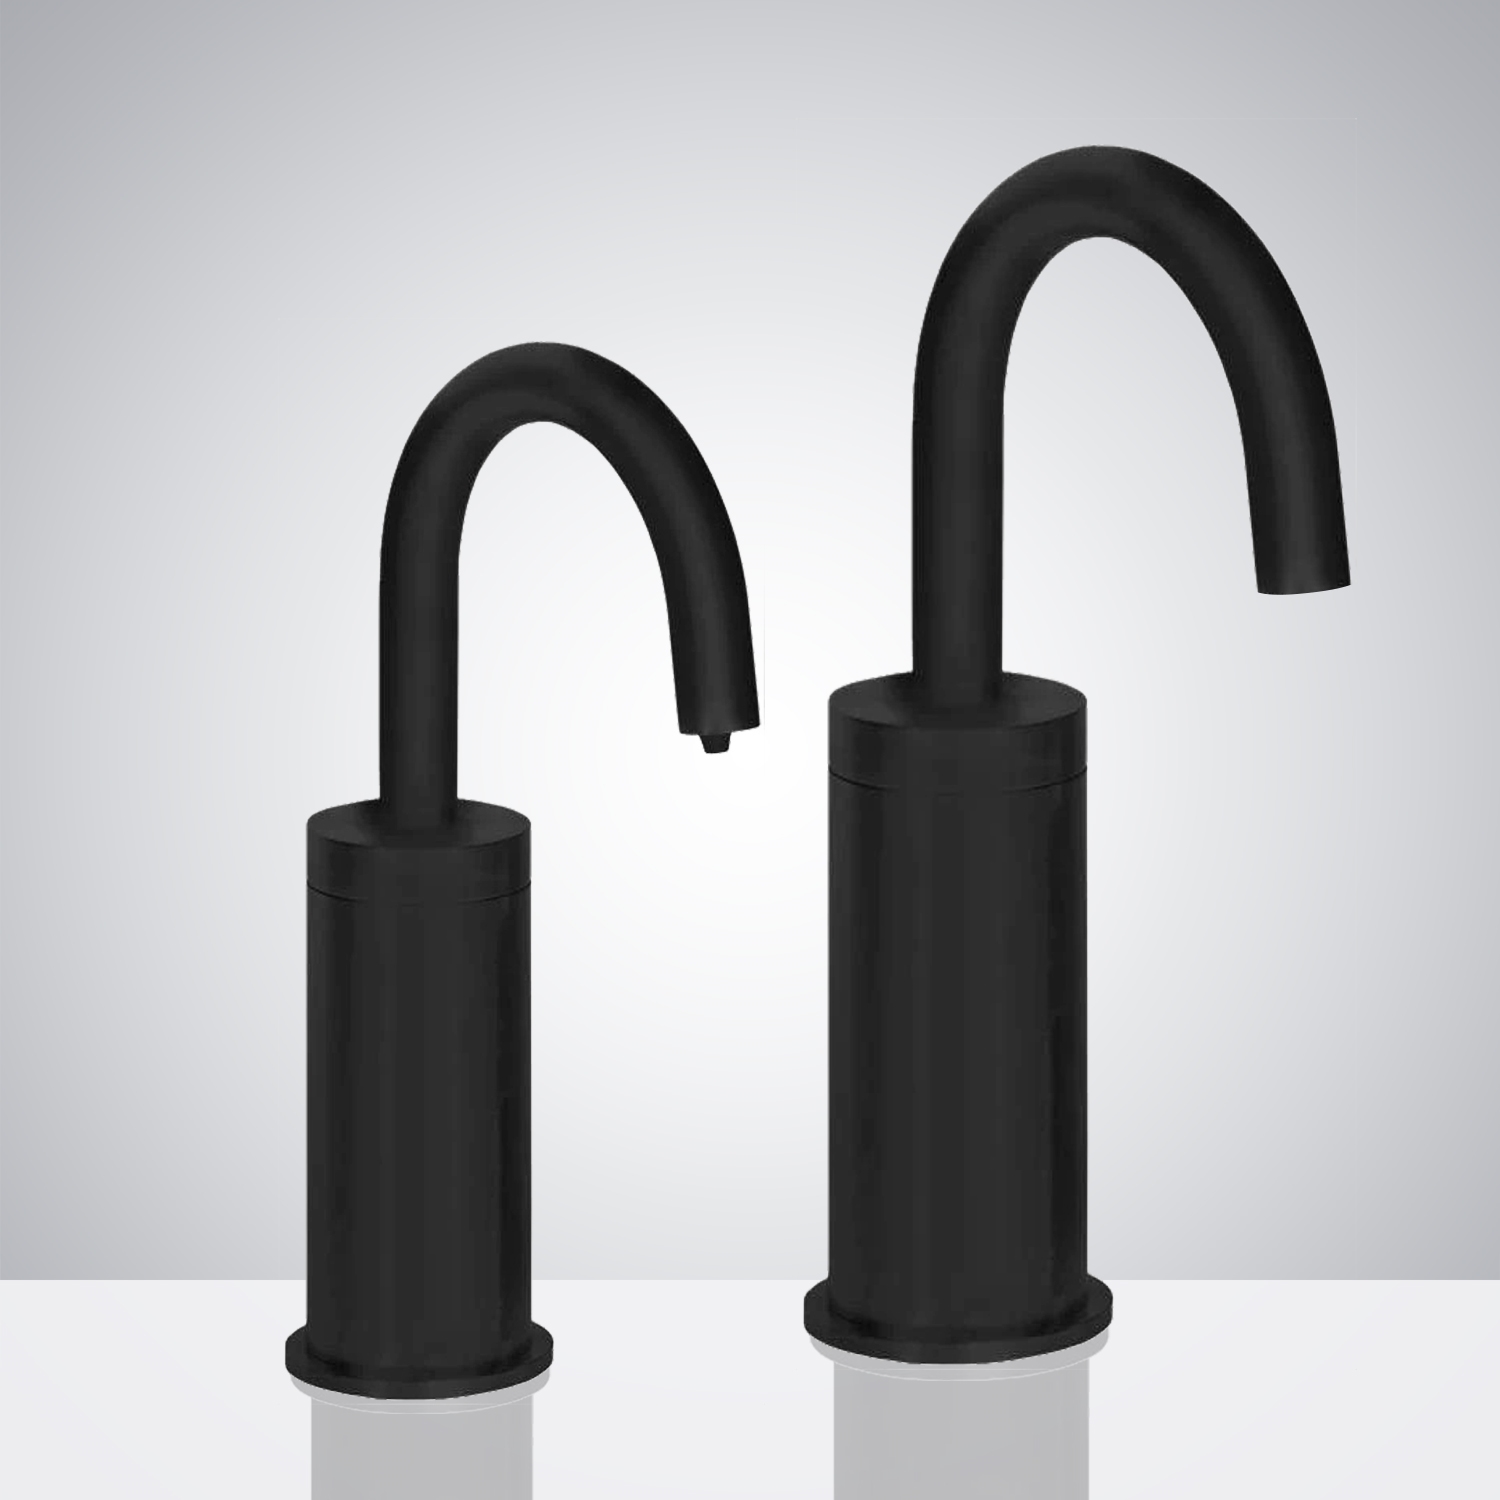 Fontana Goose Neck Freestanding Automatic Commercial Sensor Faucet And Soap Dispenser in Matte Black Finish